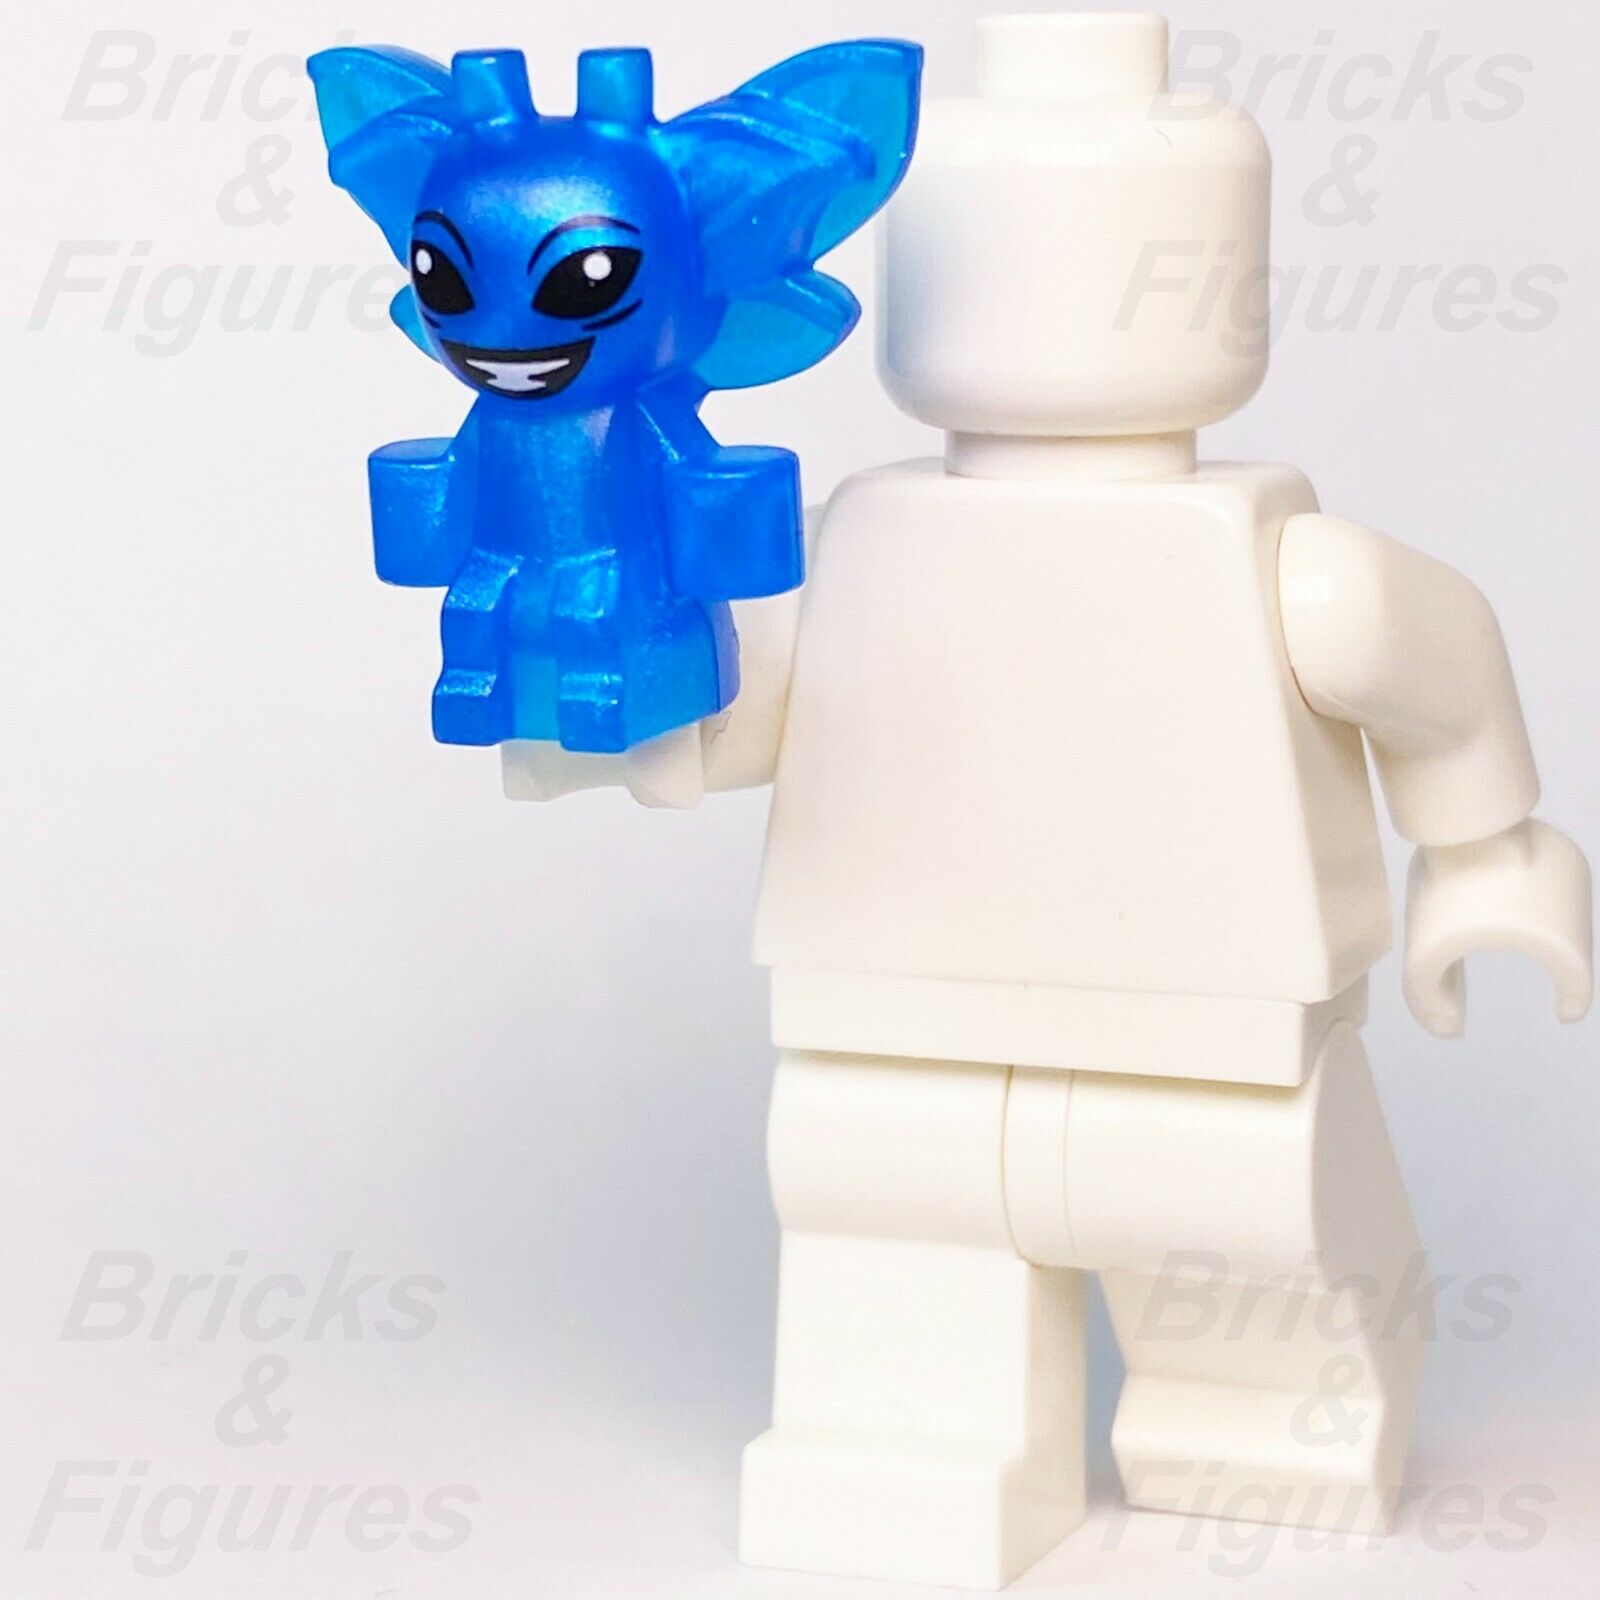 New Harry Potter LEGO Cornish Pixie Magical Beast Minifigure 76389 79200pb01 - Bricks & Figures